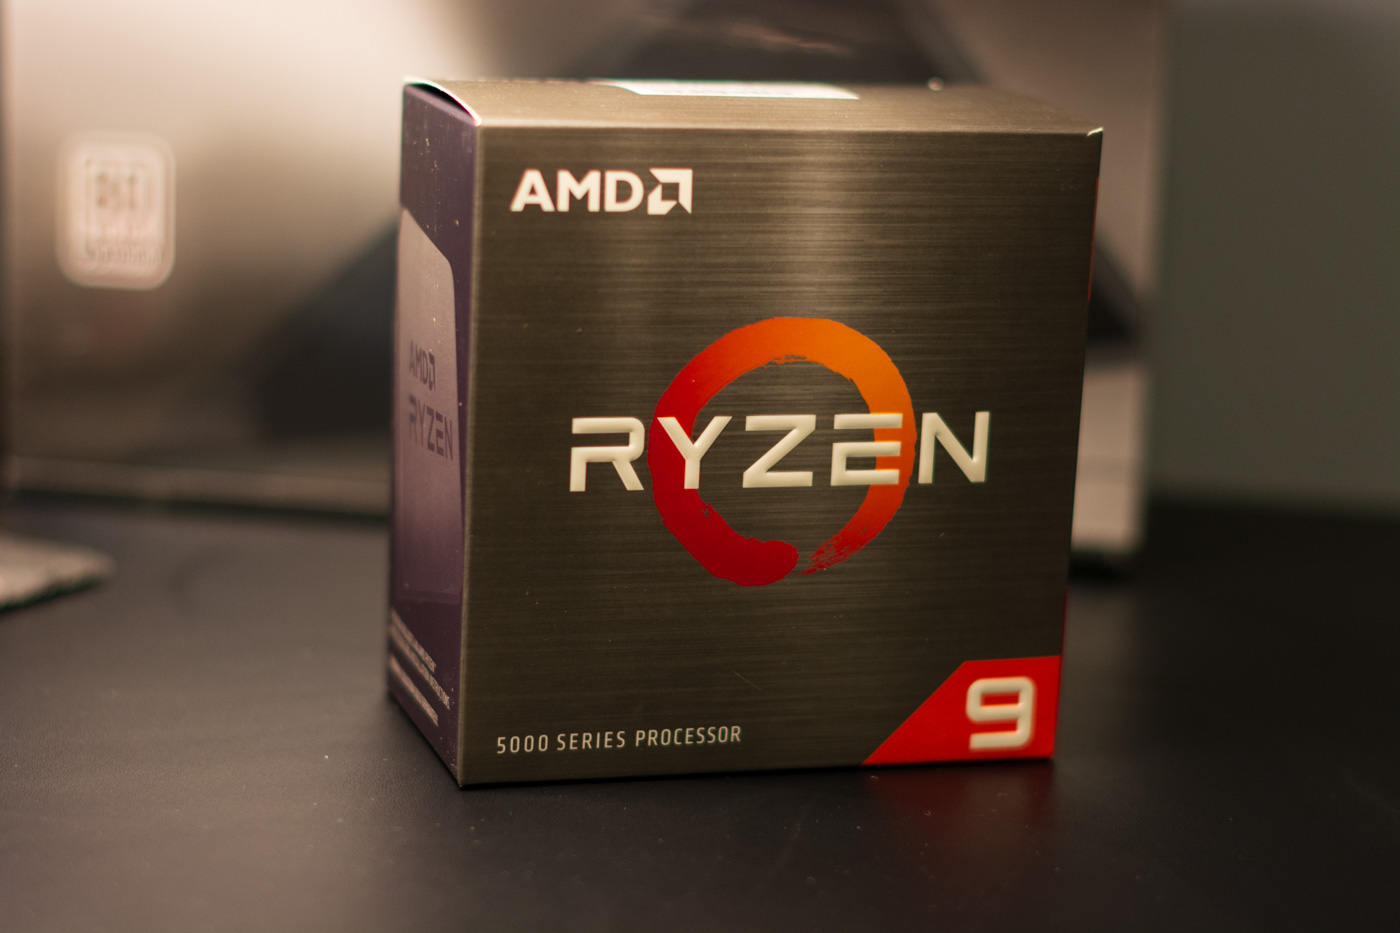 Building a new AMD monster supercomputer